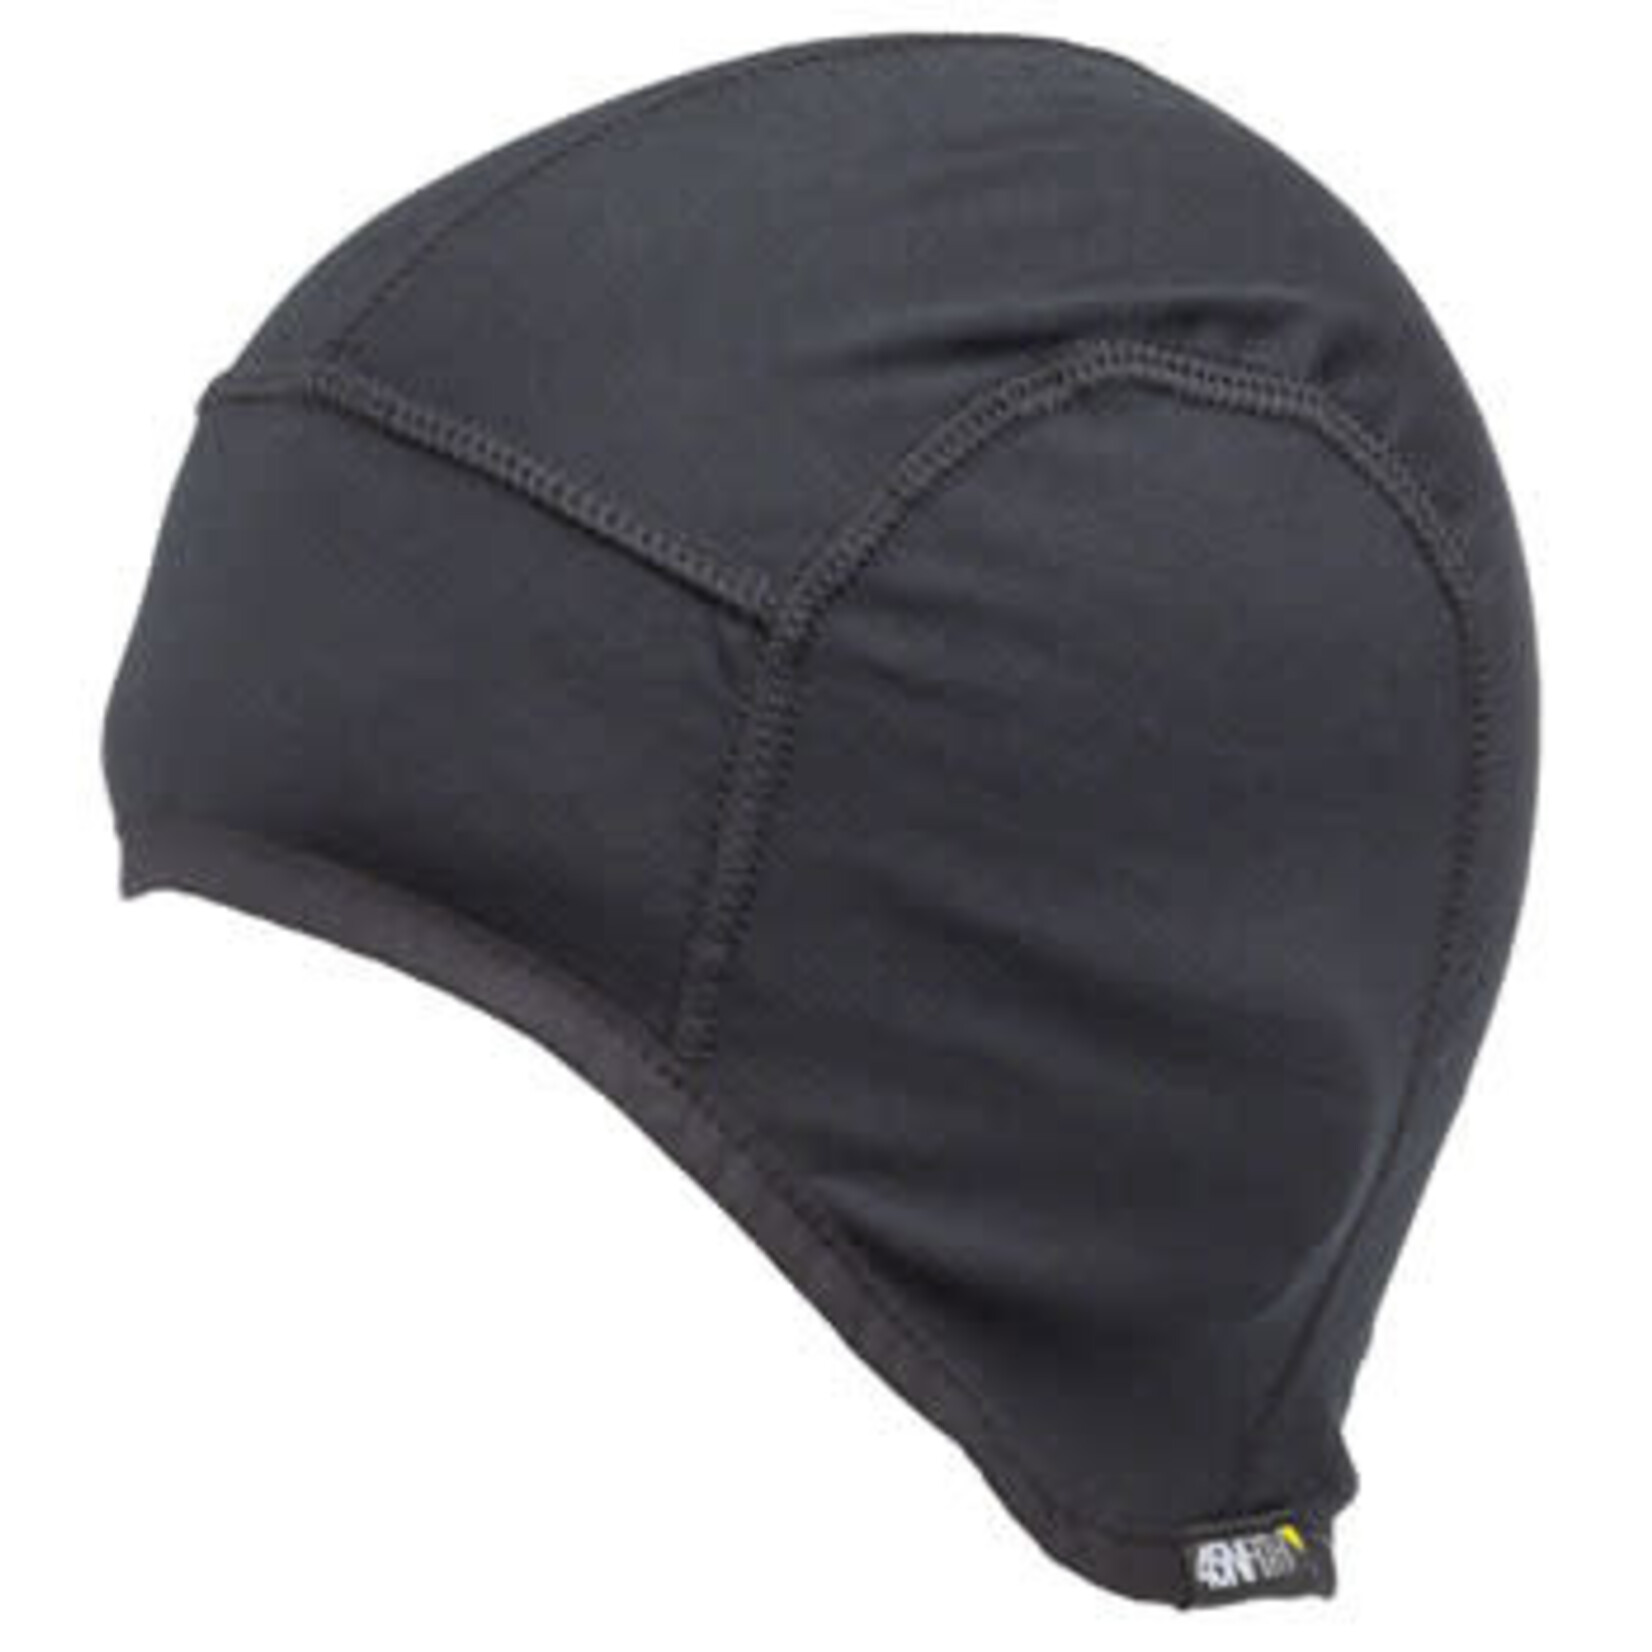 45NRTH 45NRTH Stavanger Lightweight Wool Cycling Cap Hat - Black, Large/X-Large